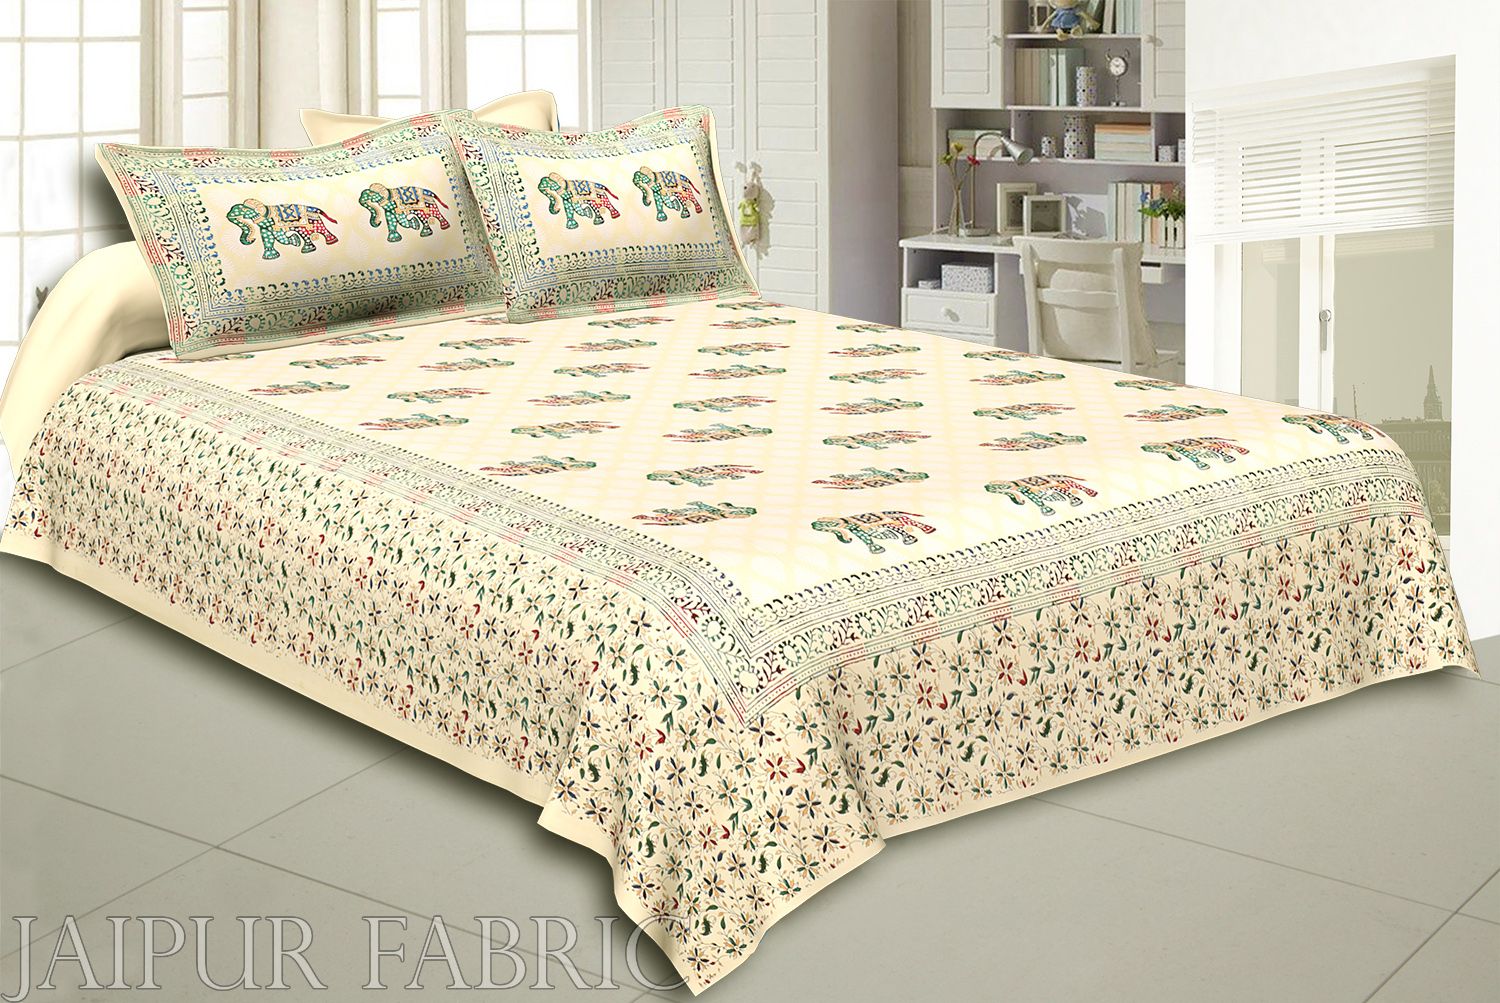 Cream Base Satrangi Gold Print With Elephant Super Fine Cotton Double Bedsheet